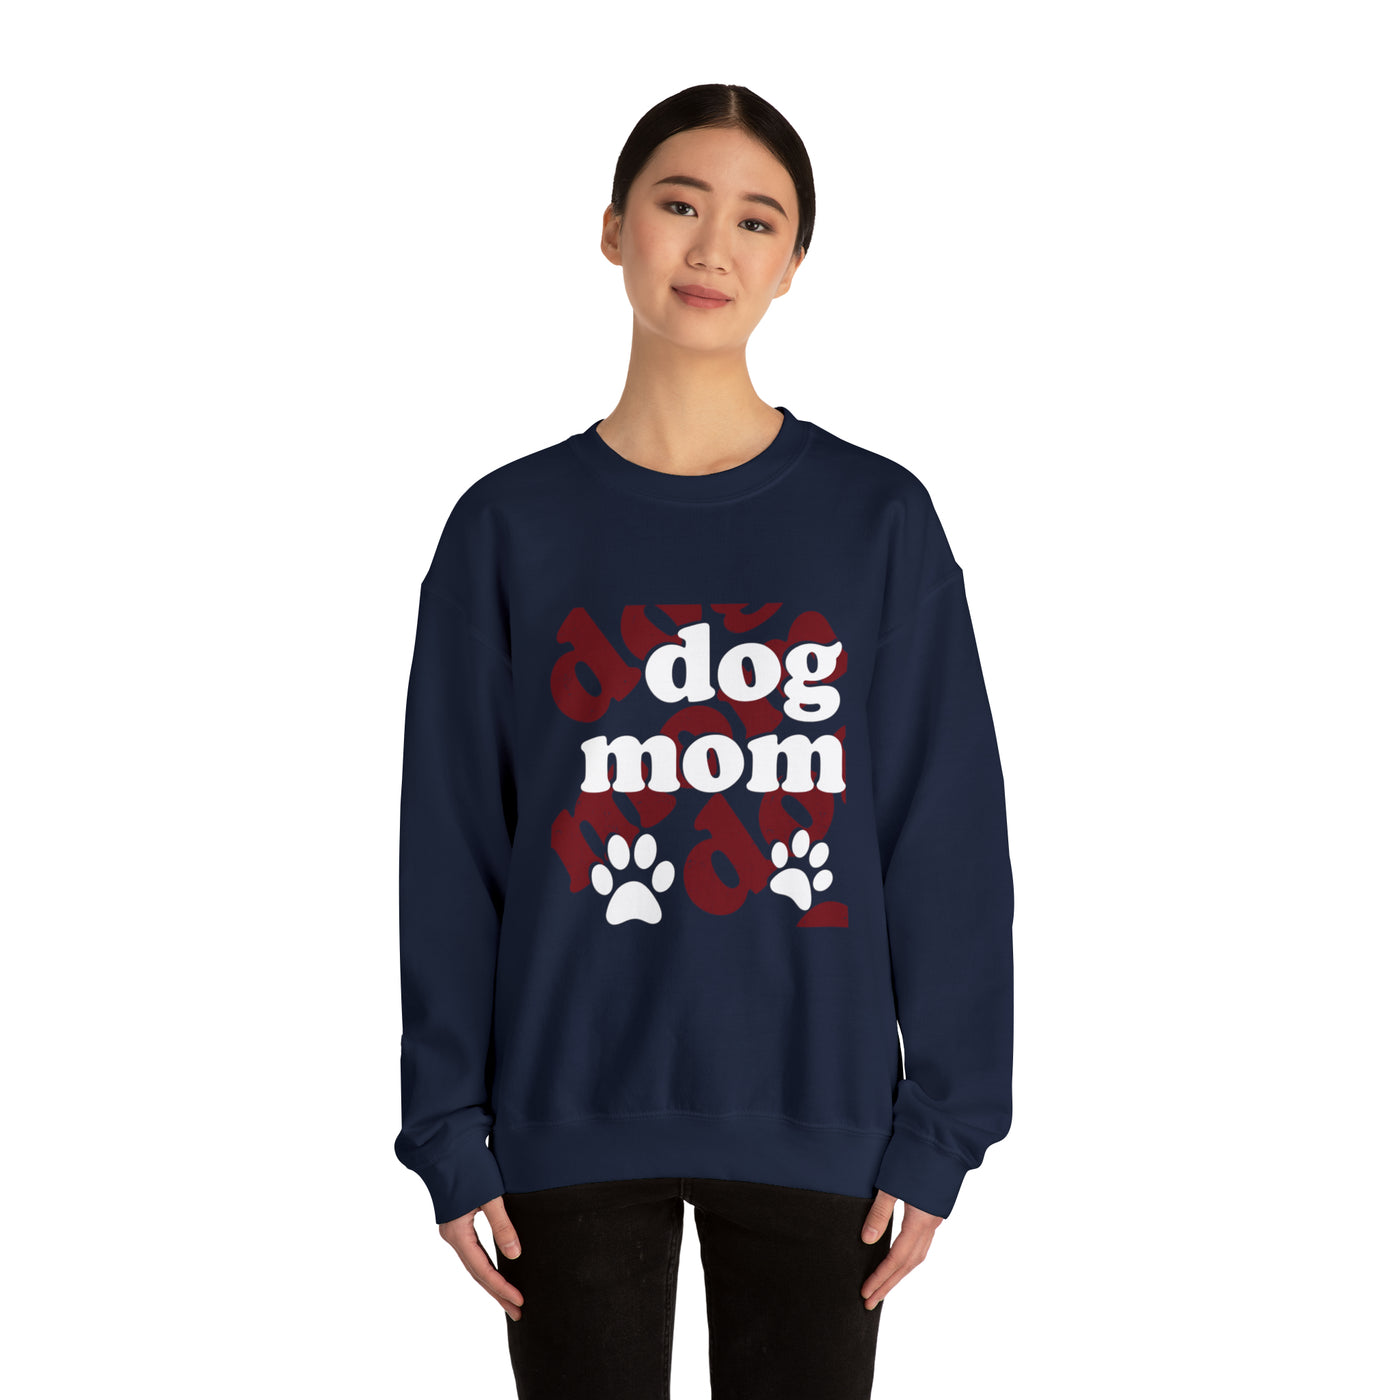 Dog mom shadow Colored Print Sweatshirt